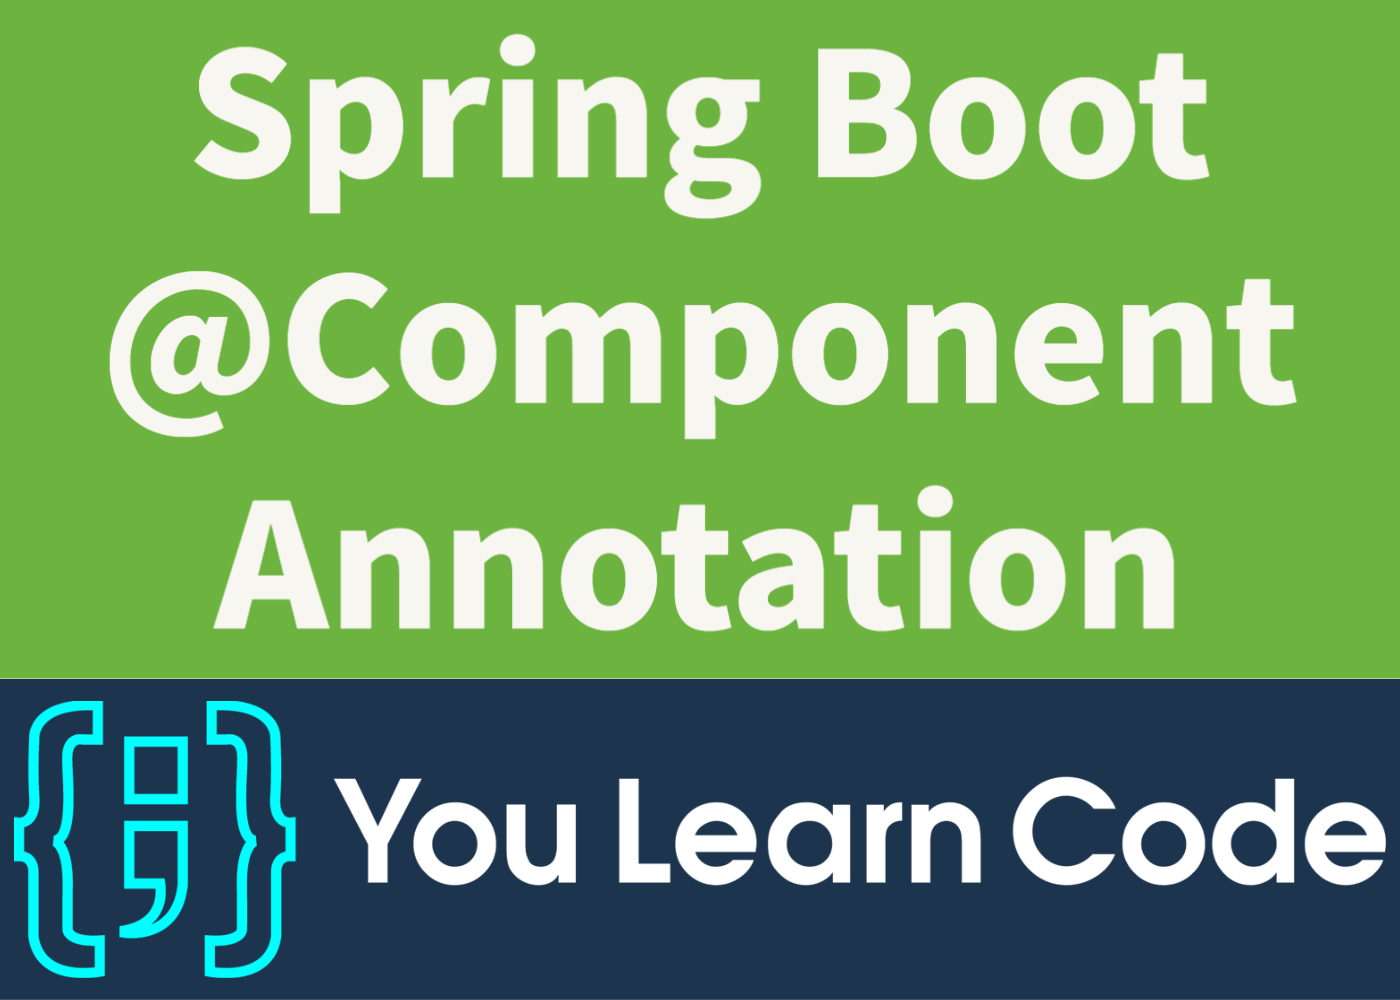 define custom annotation spring